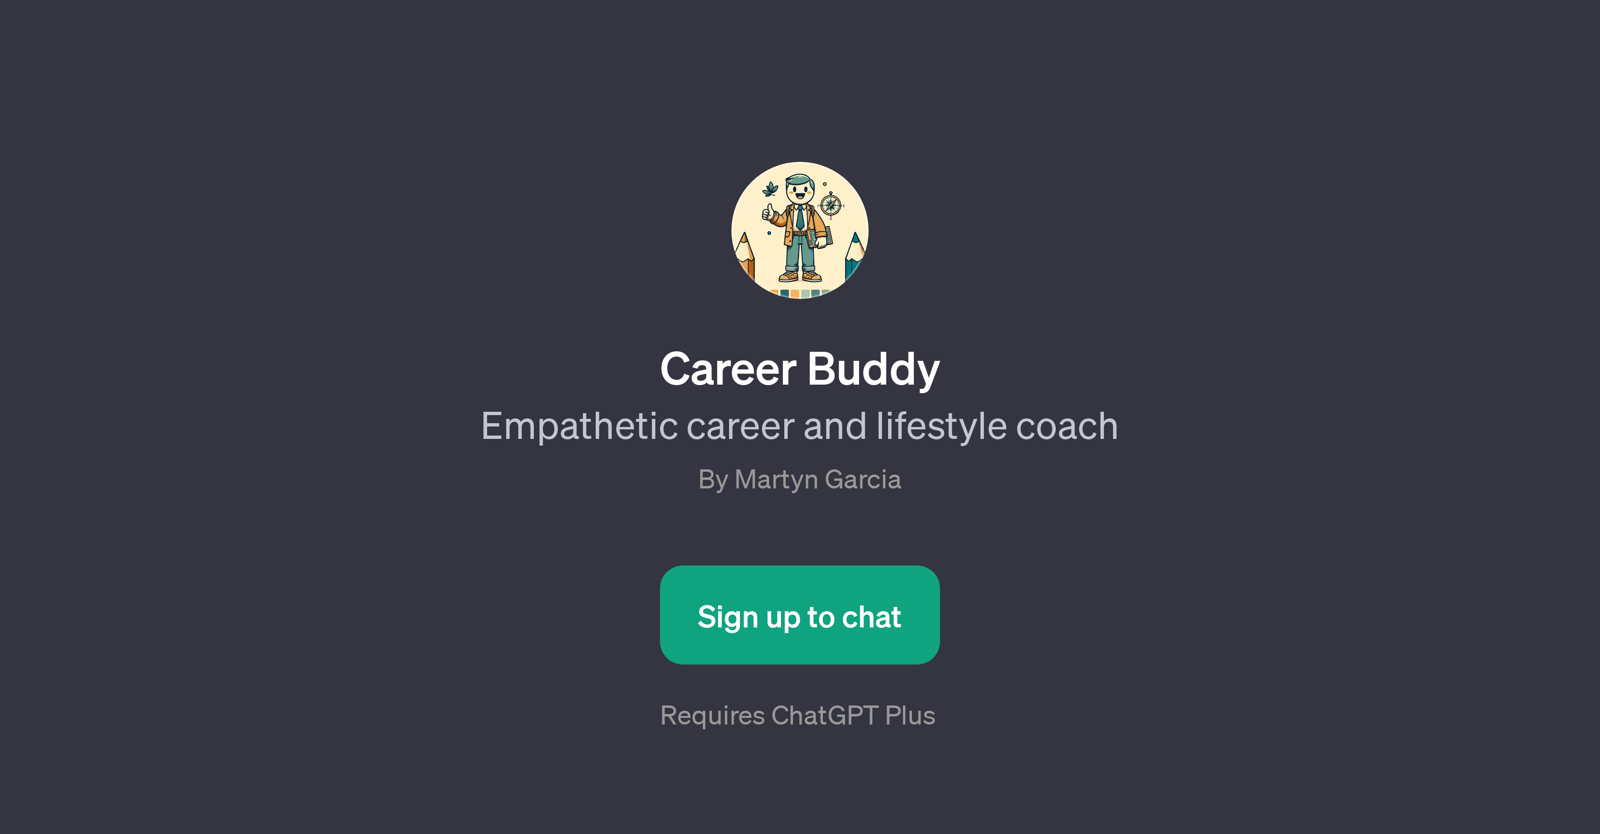 Career Buddy website